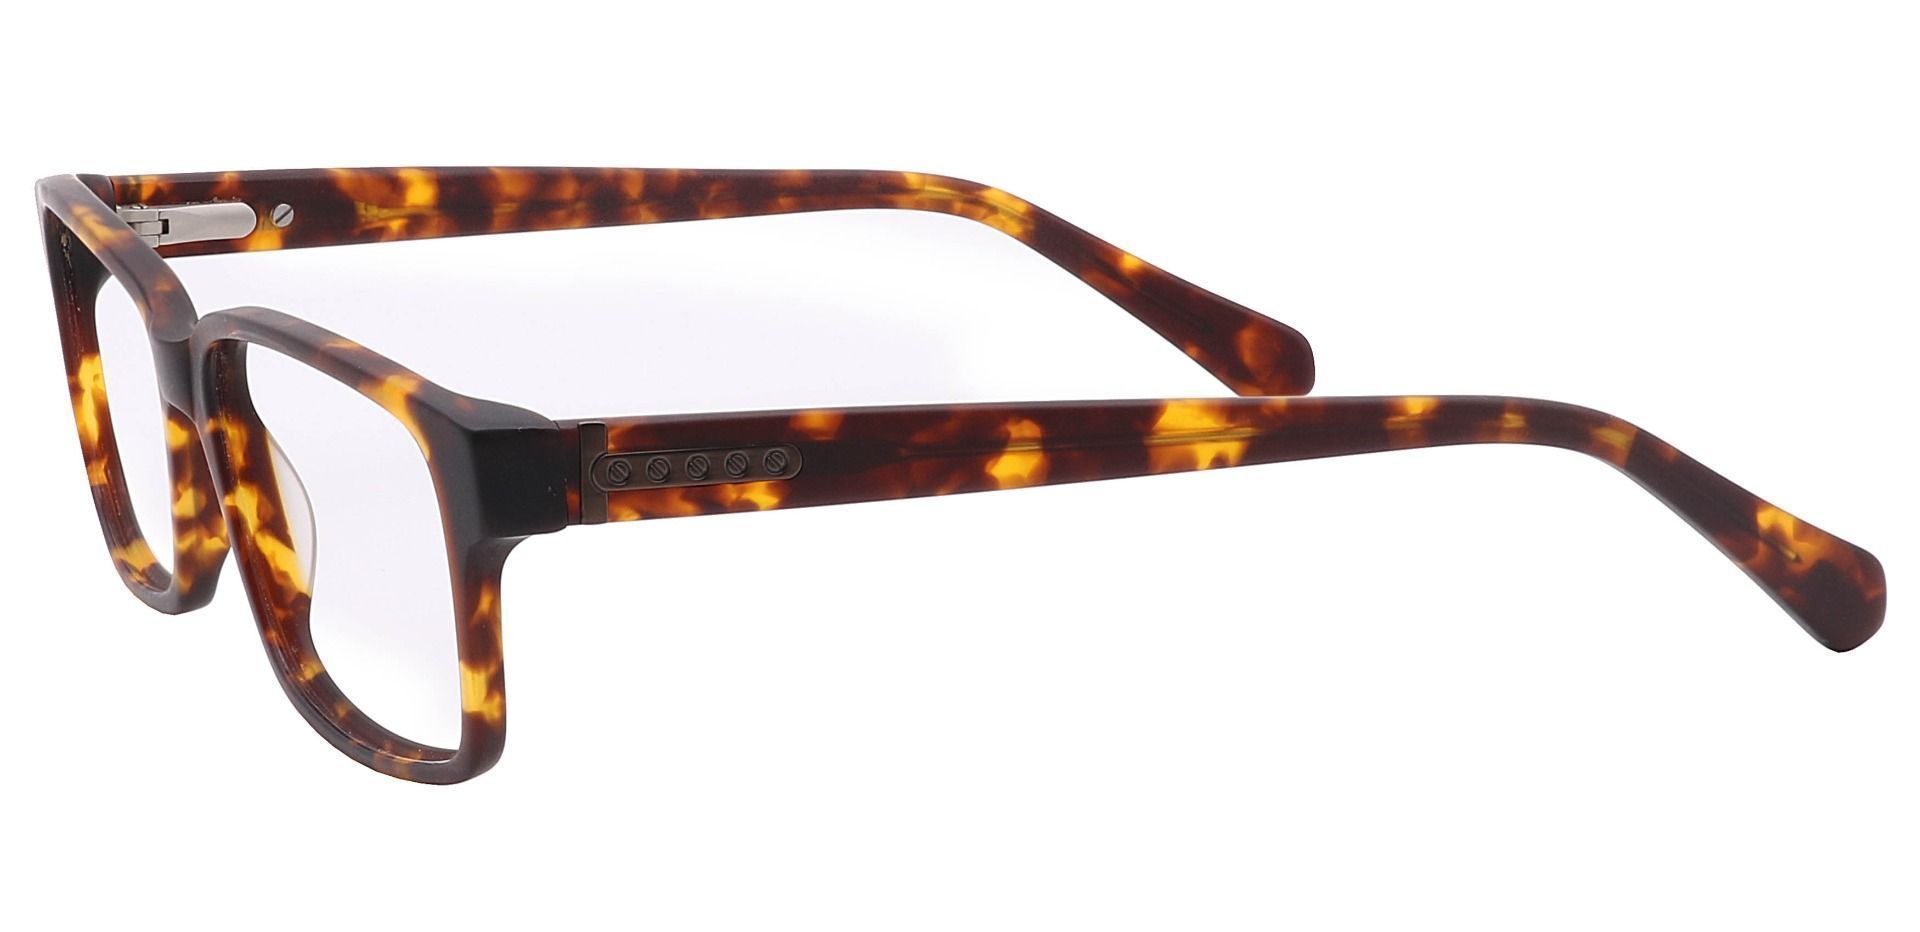 Clifford Rectangle Non-Rx Glasses - Tortoise